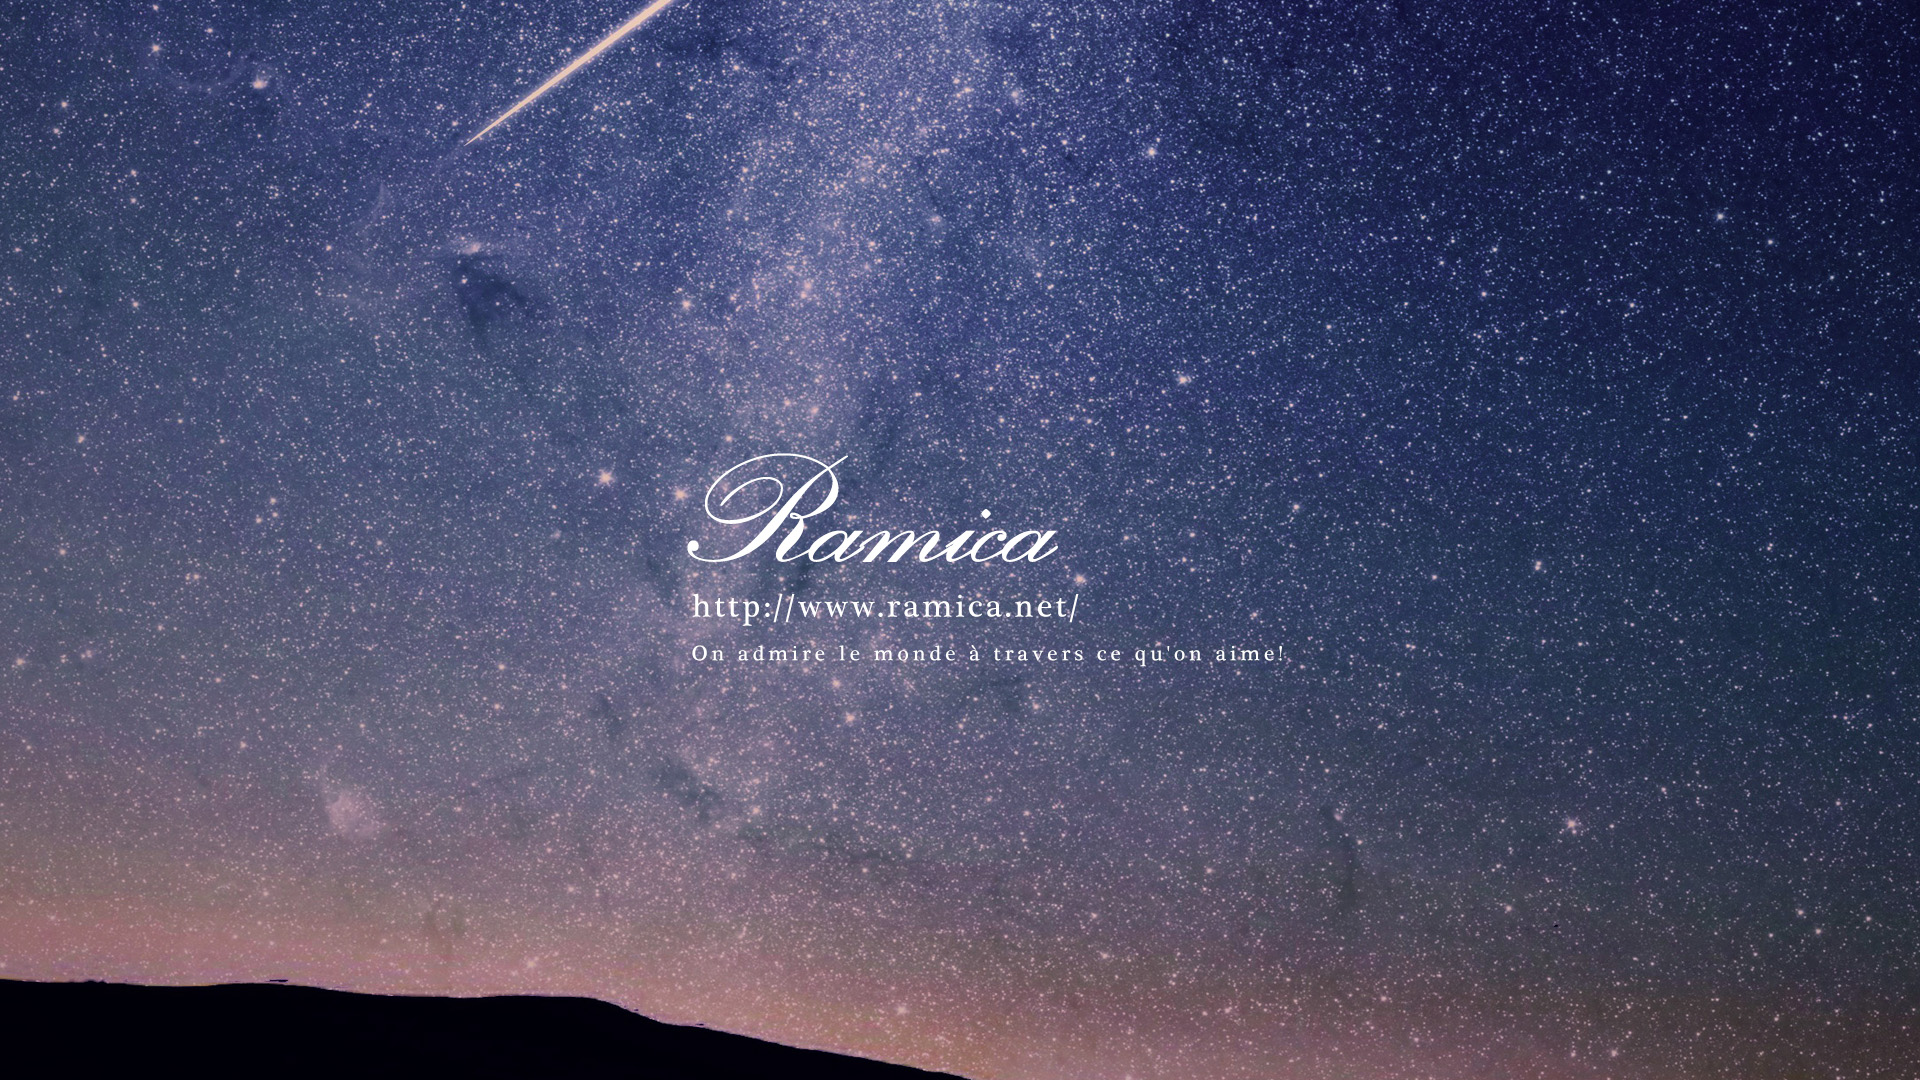 Pc パソコン用無料壁紙ダウンロード 夜の星空と流星 Ramica